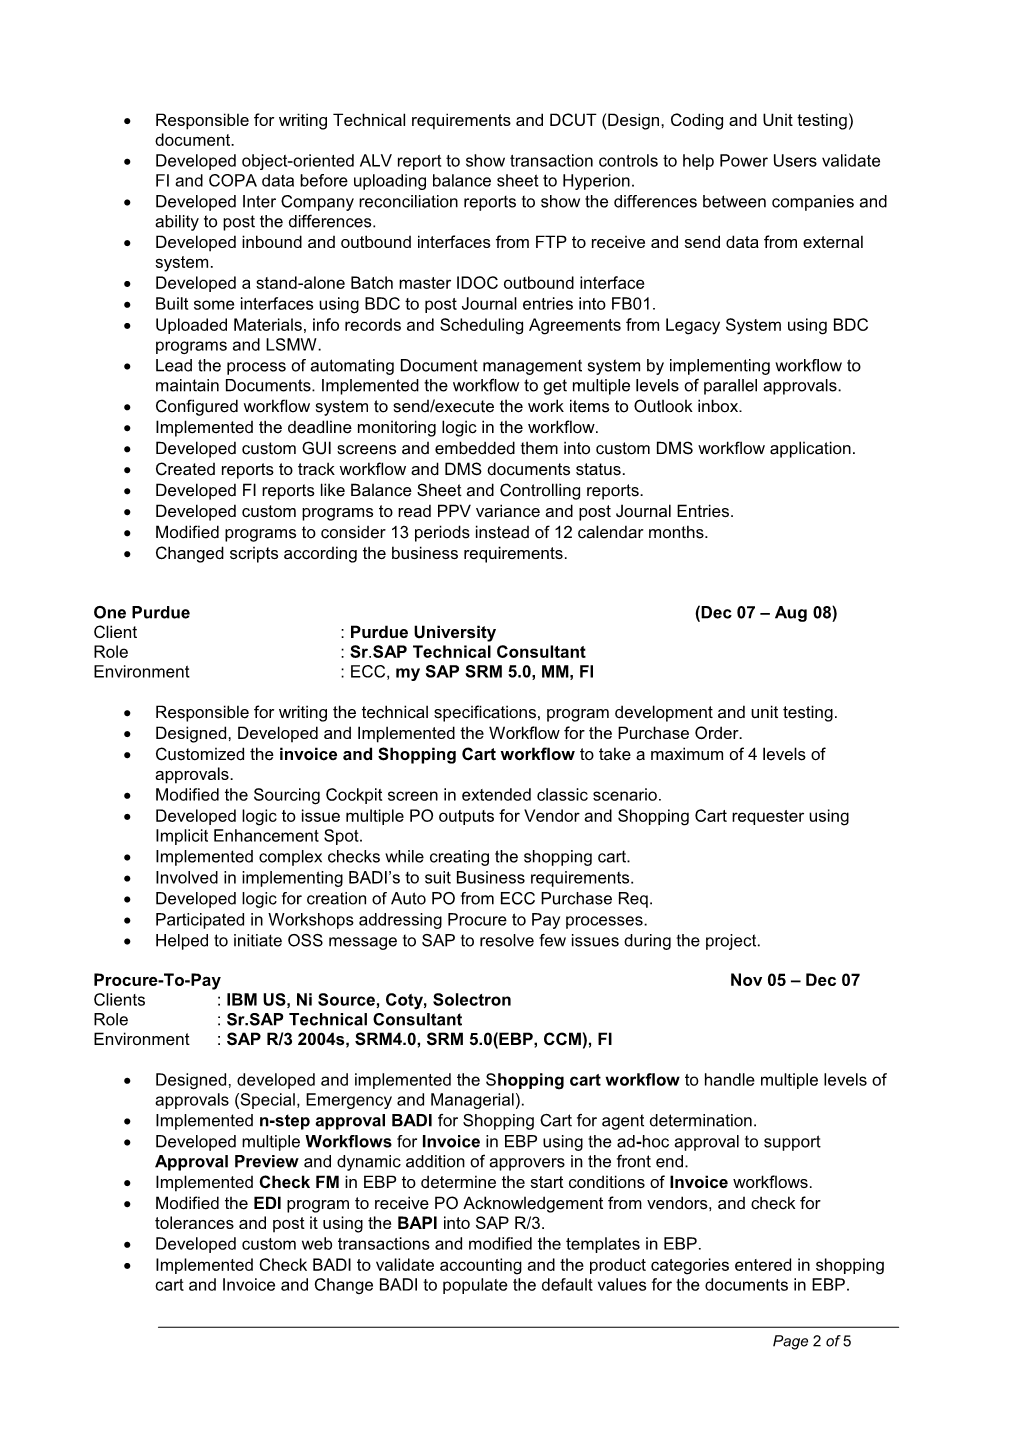 Sample Employee Resume